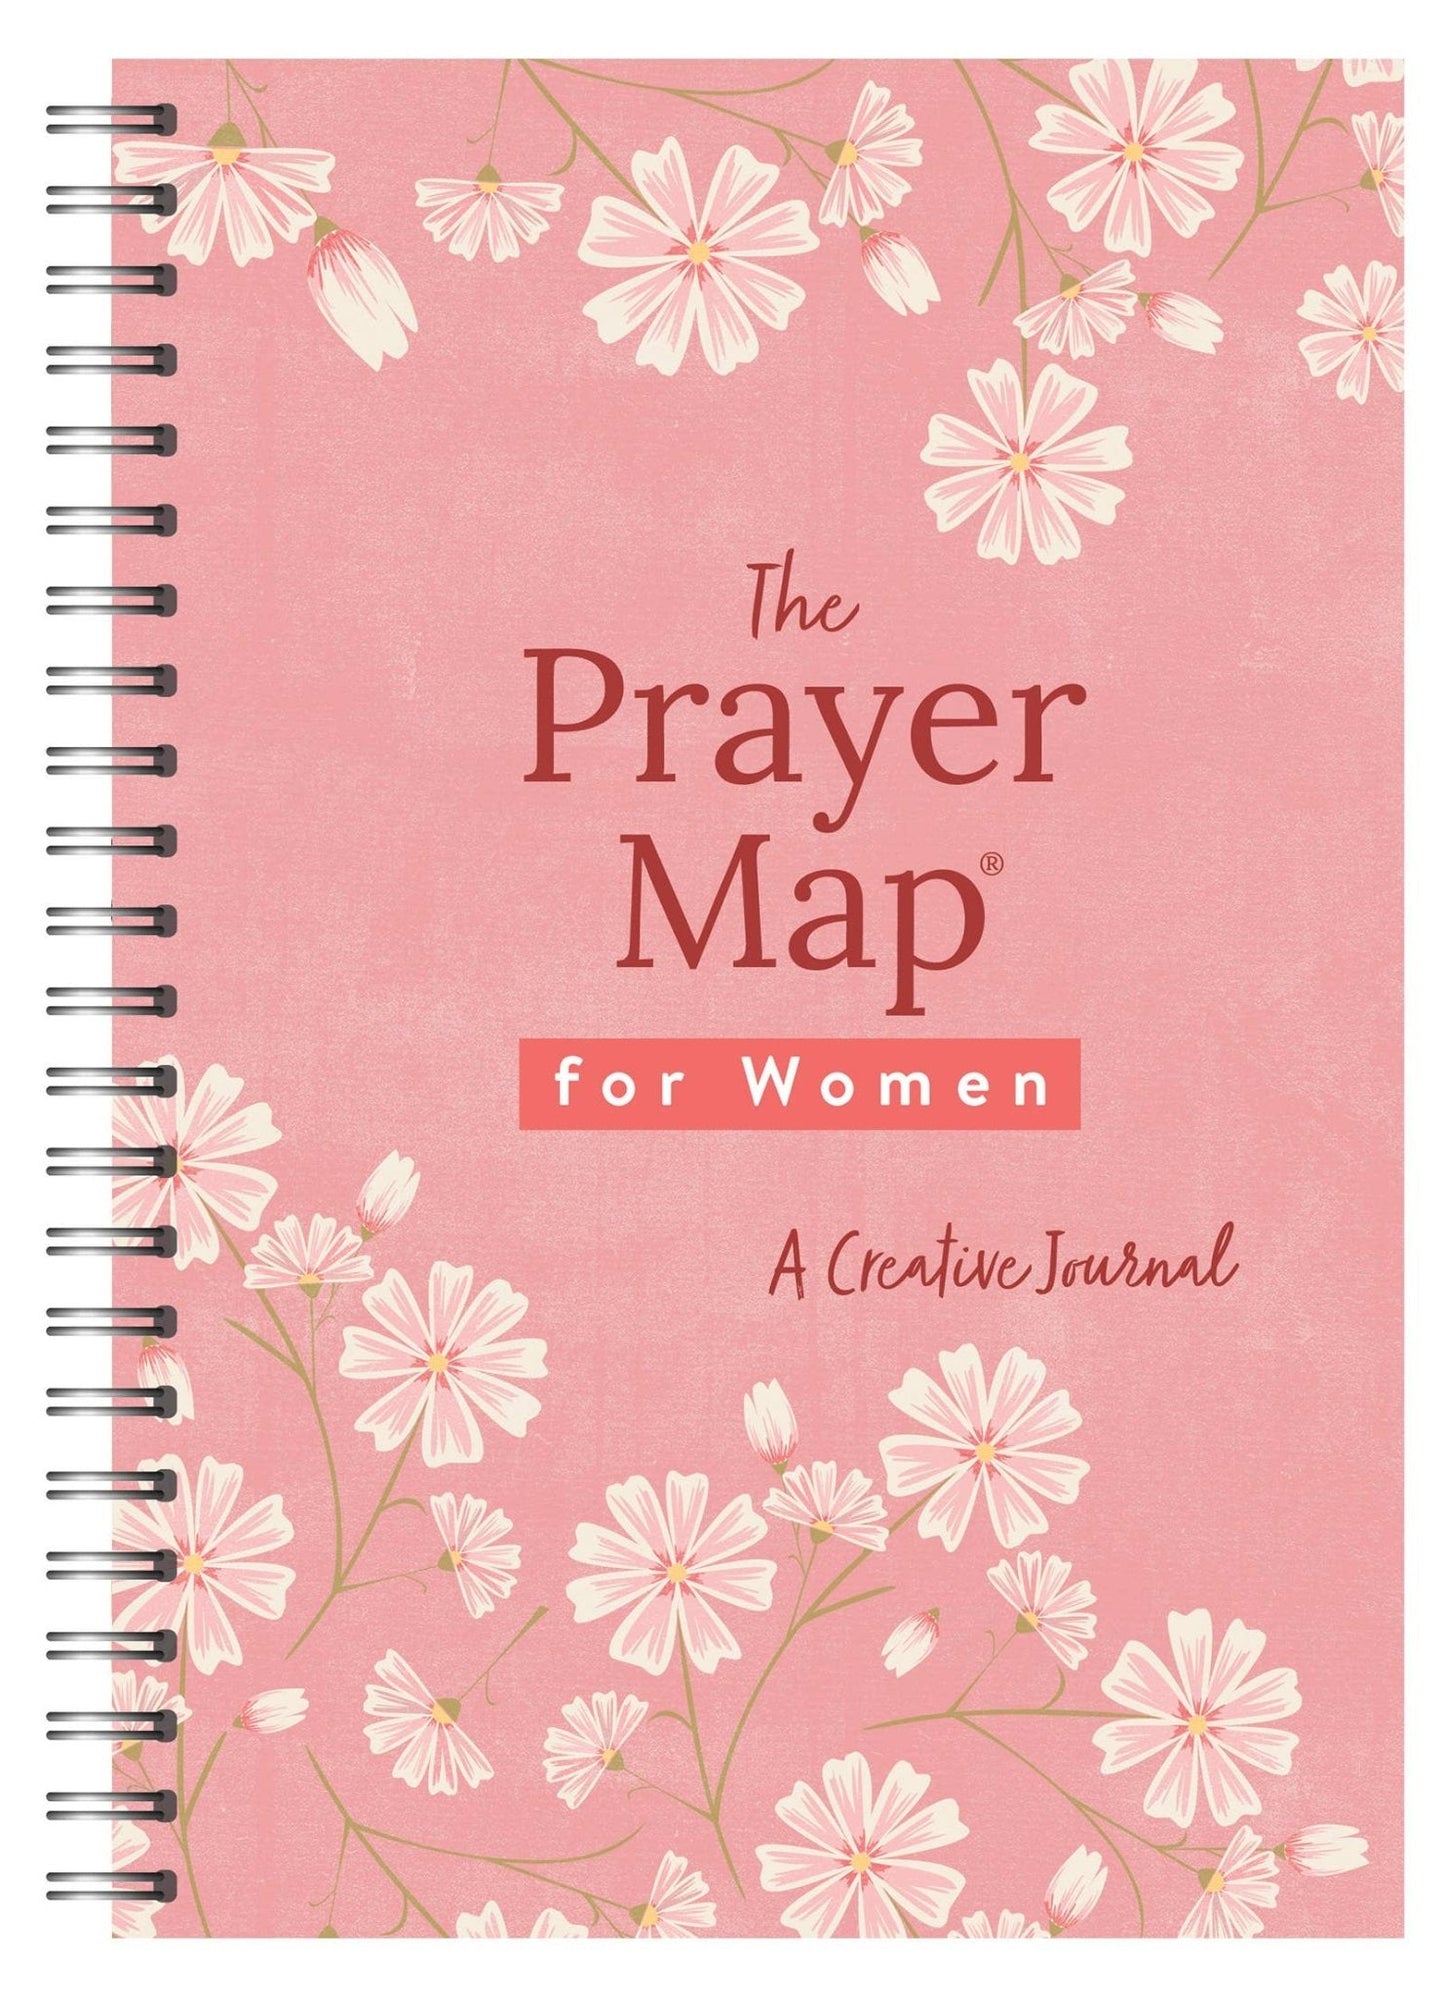 The Prayer Map for Women [Cherry Wildflowers] | 2FruitBearers